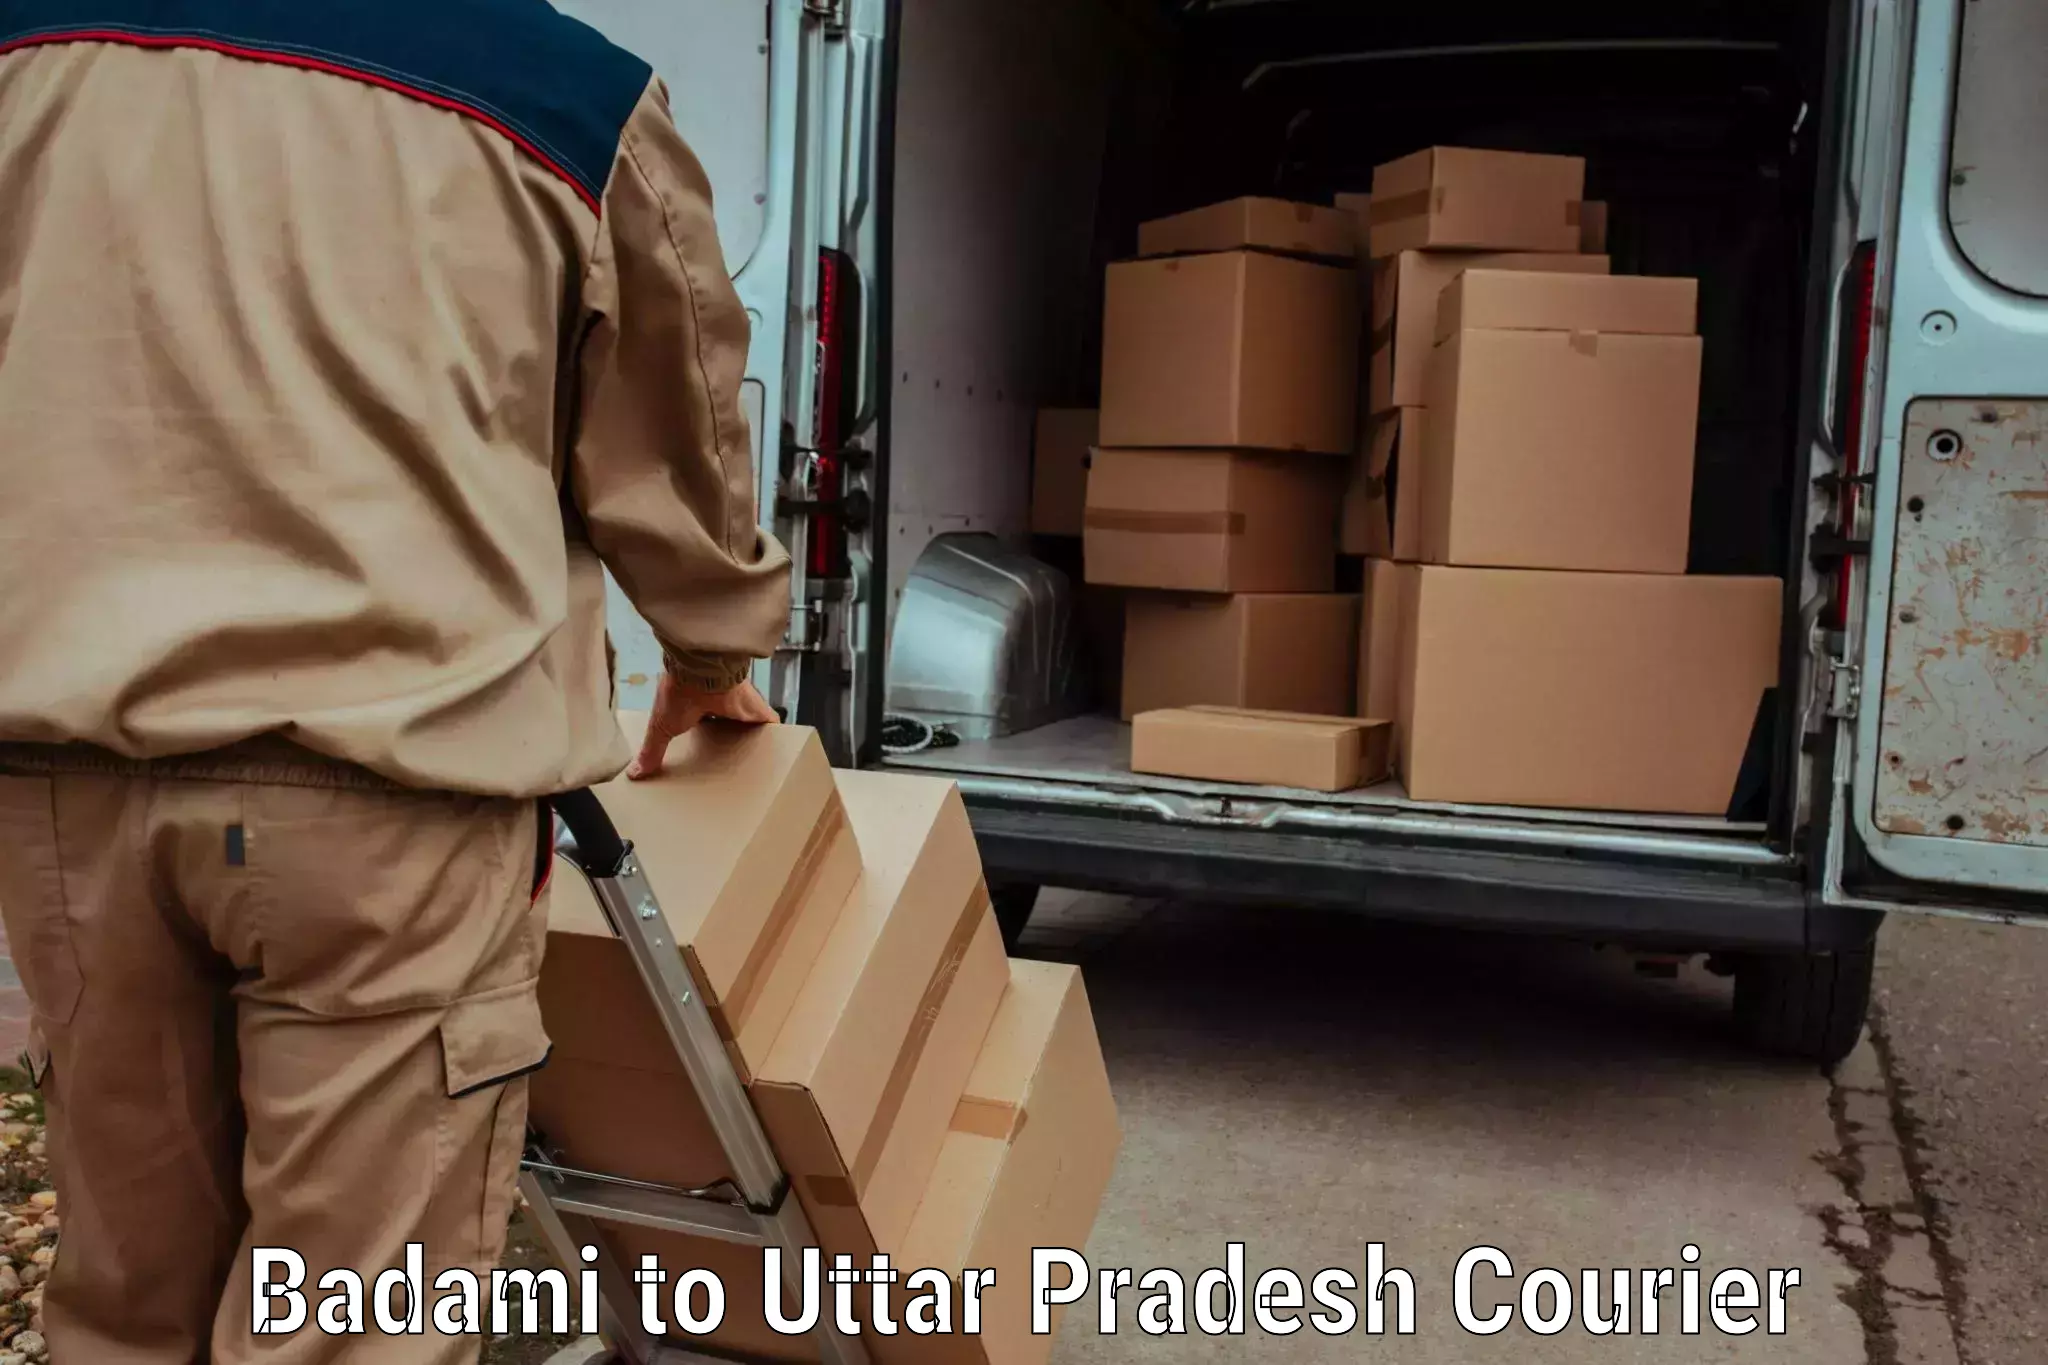 24/7 courier service in Badami to Shohratgarh